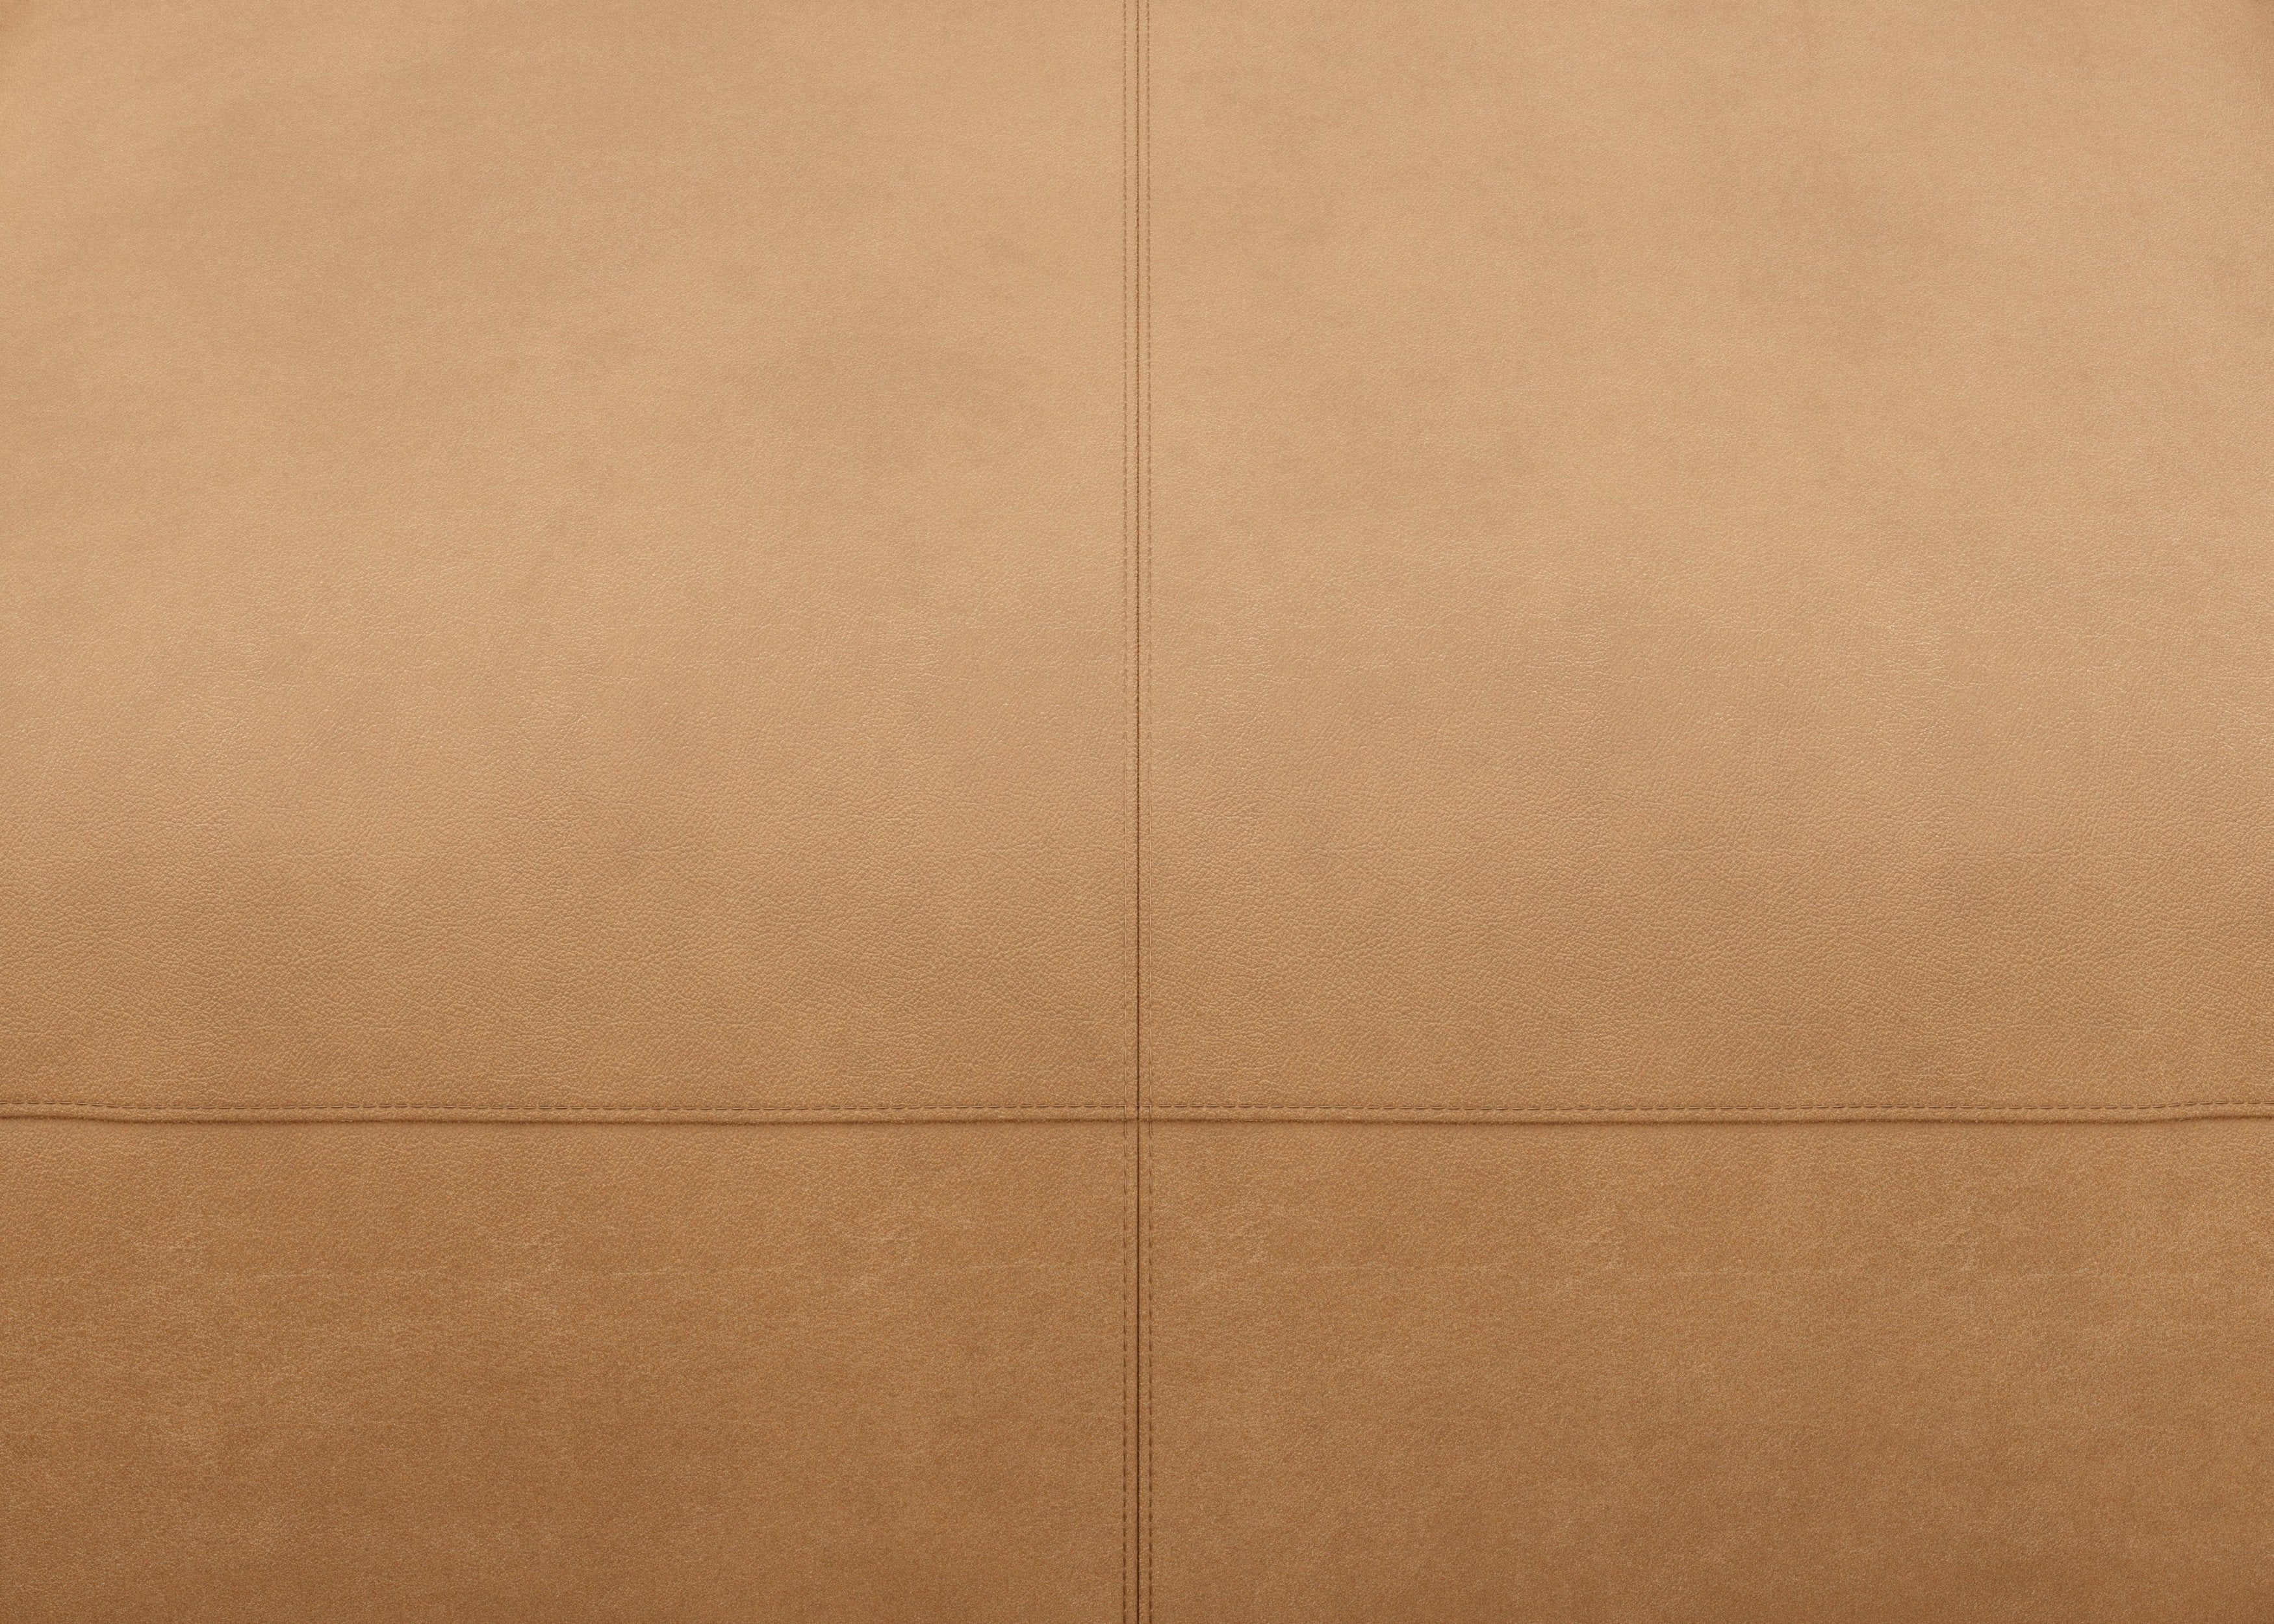 vetsak®-Sofa Loveseat L Leather brown